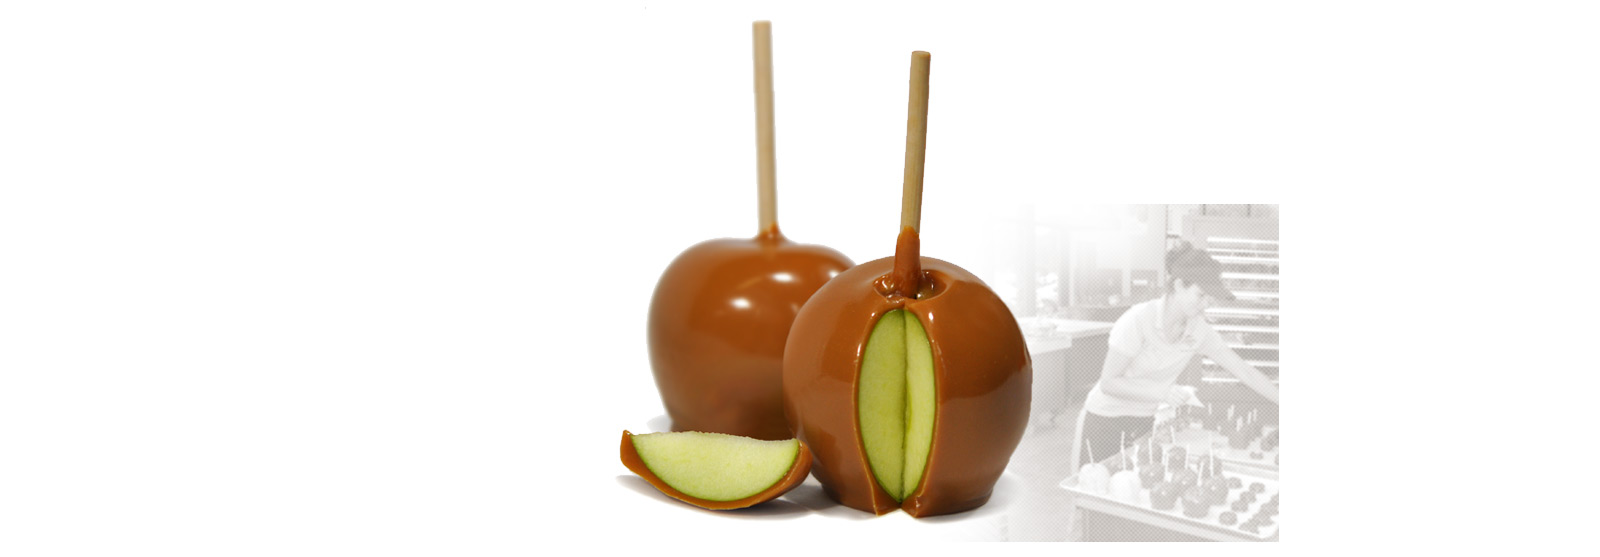 Photo of 2 Caramel Apples